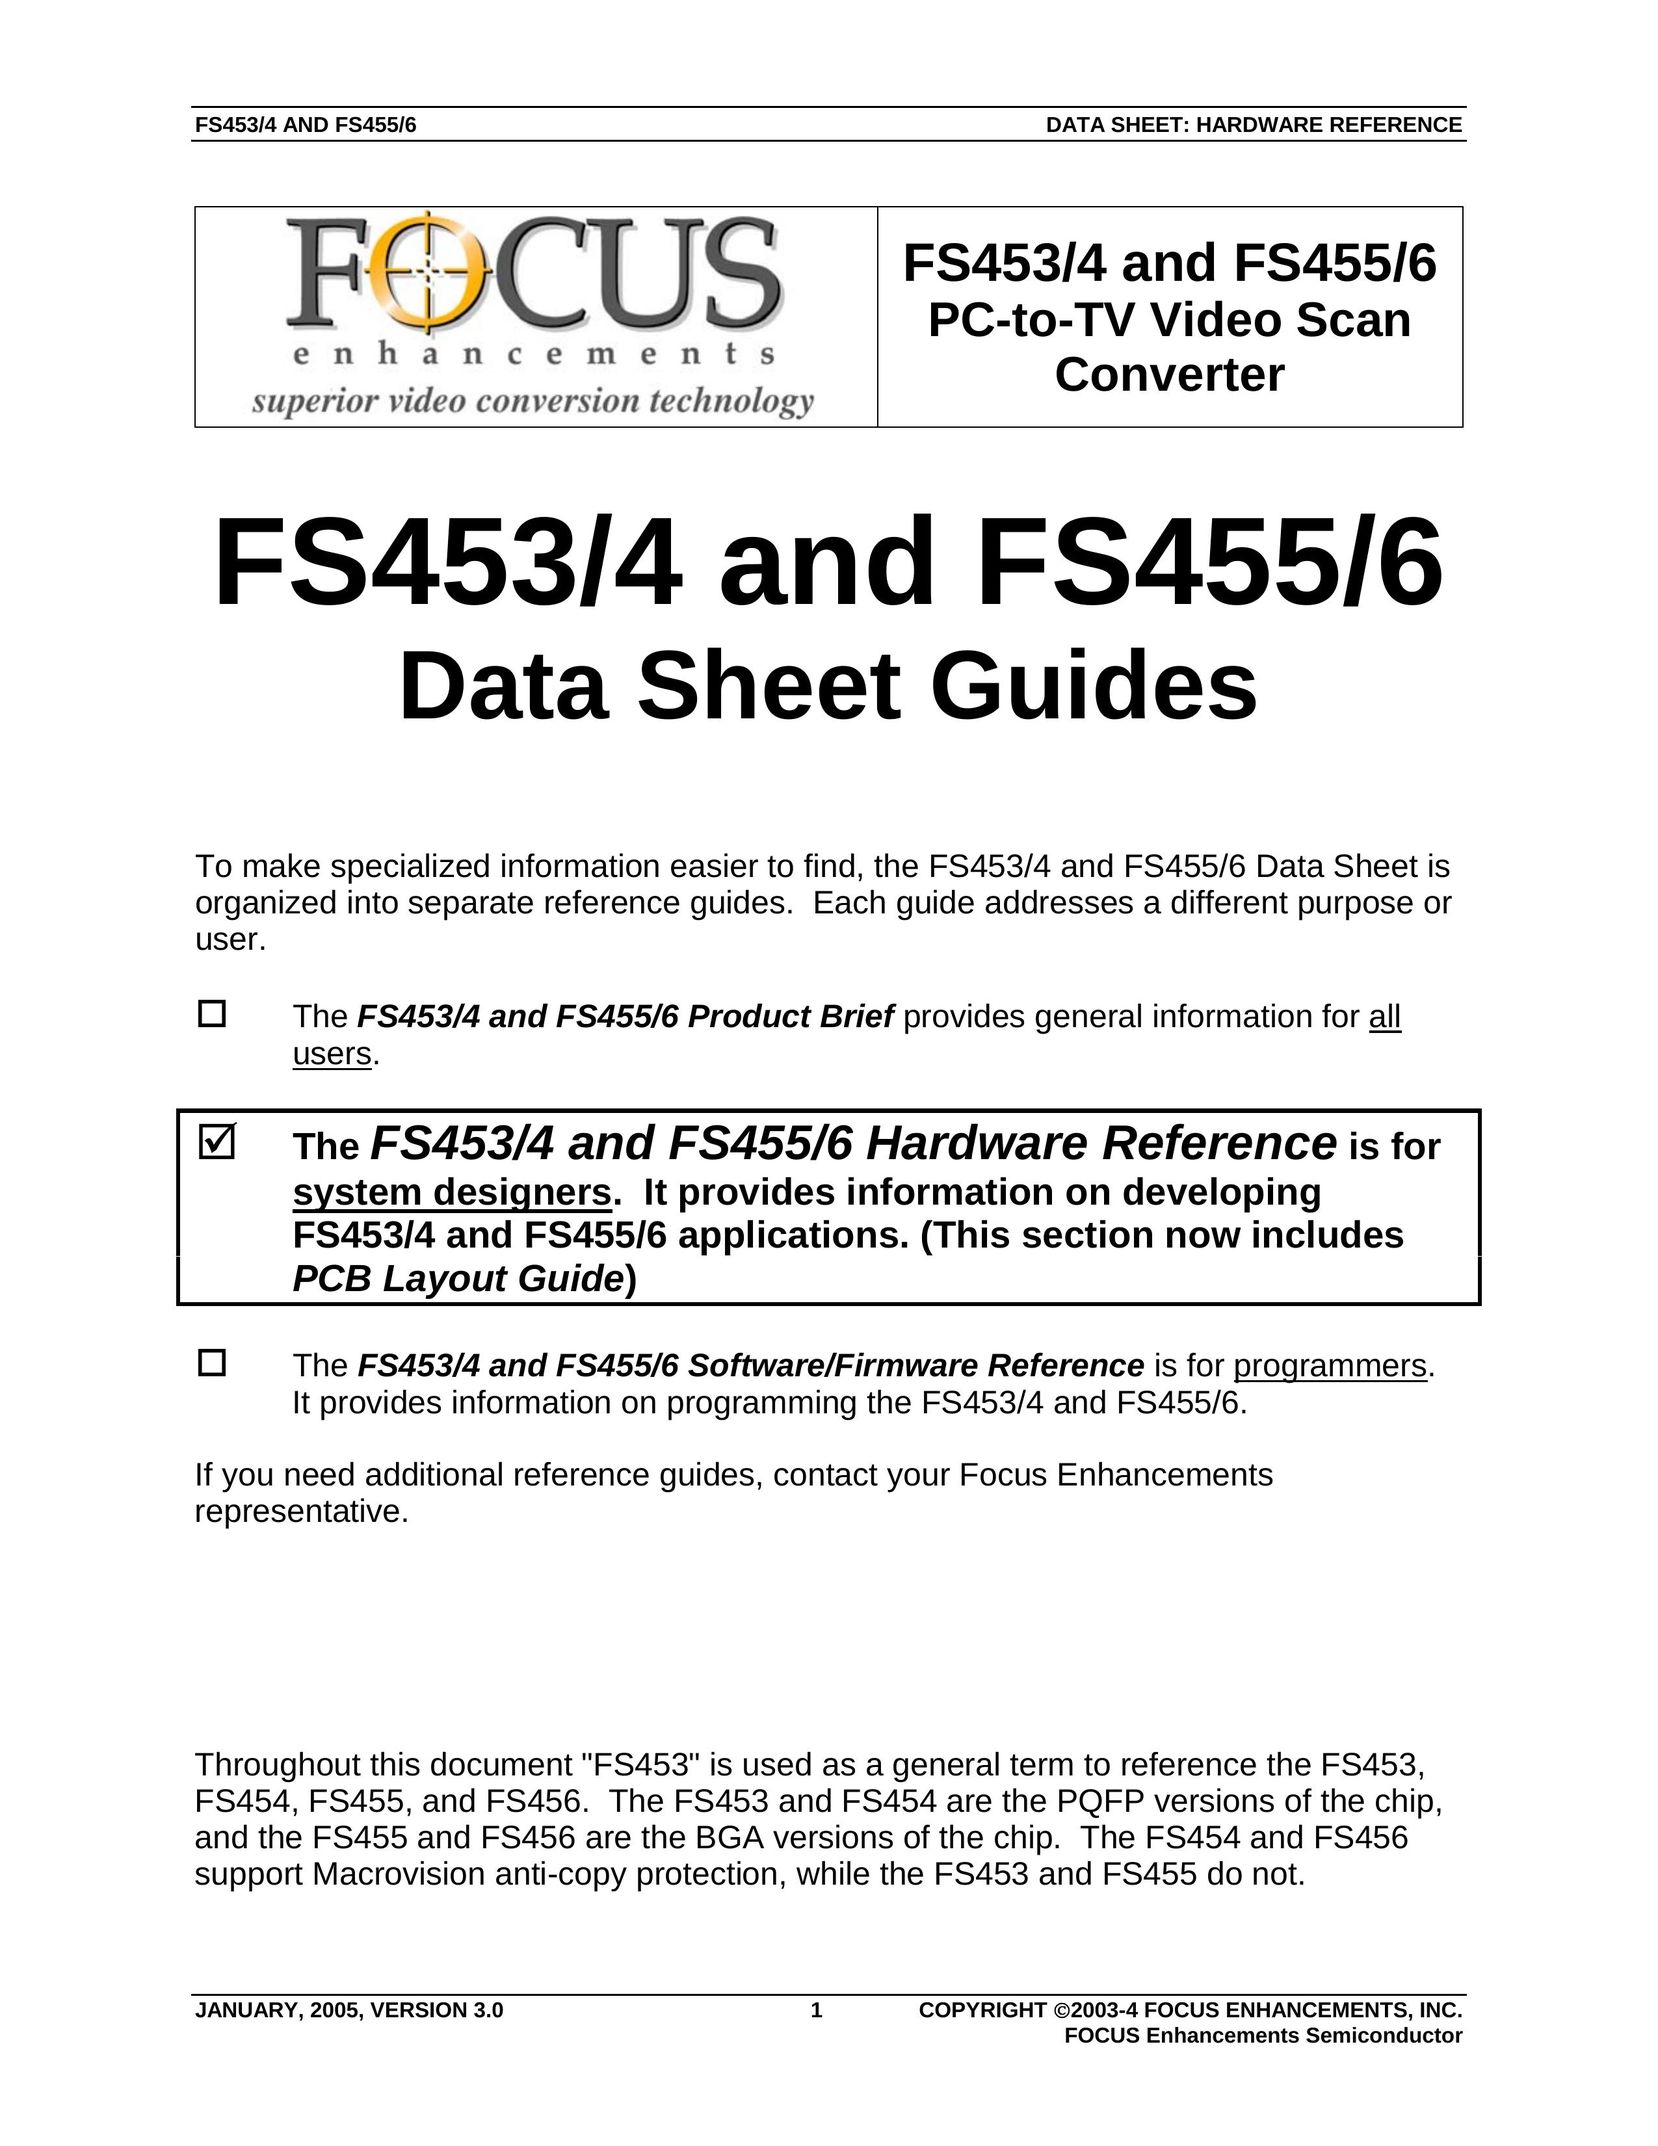 FOCUS Enhancements FS454 Network Router User Manual